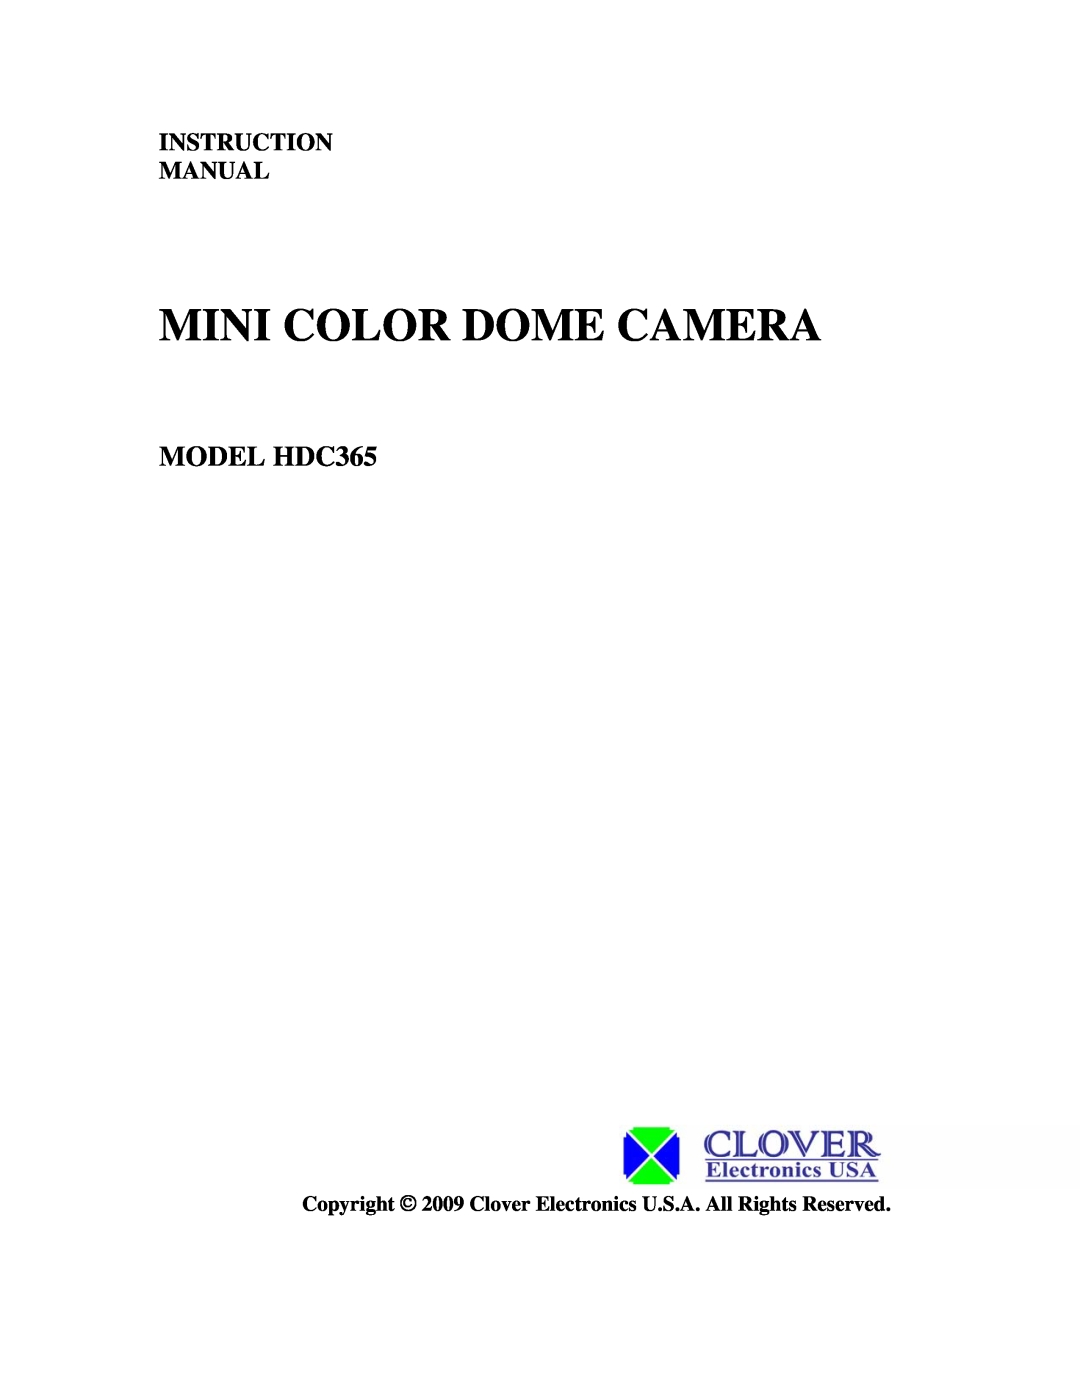 Clover Electronics instruction manual MODEL HDC365, Mini Color Dome Camera 